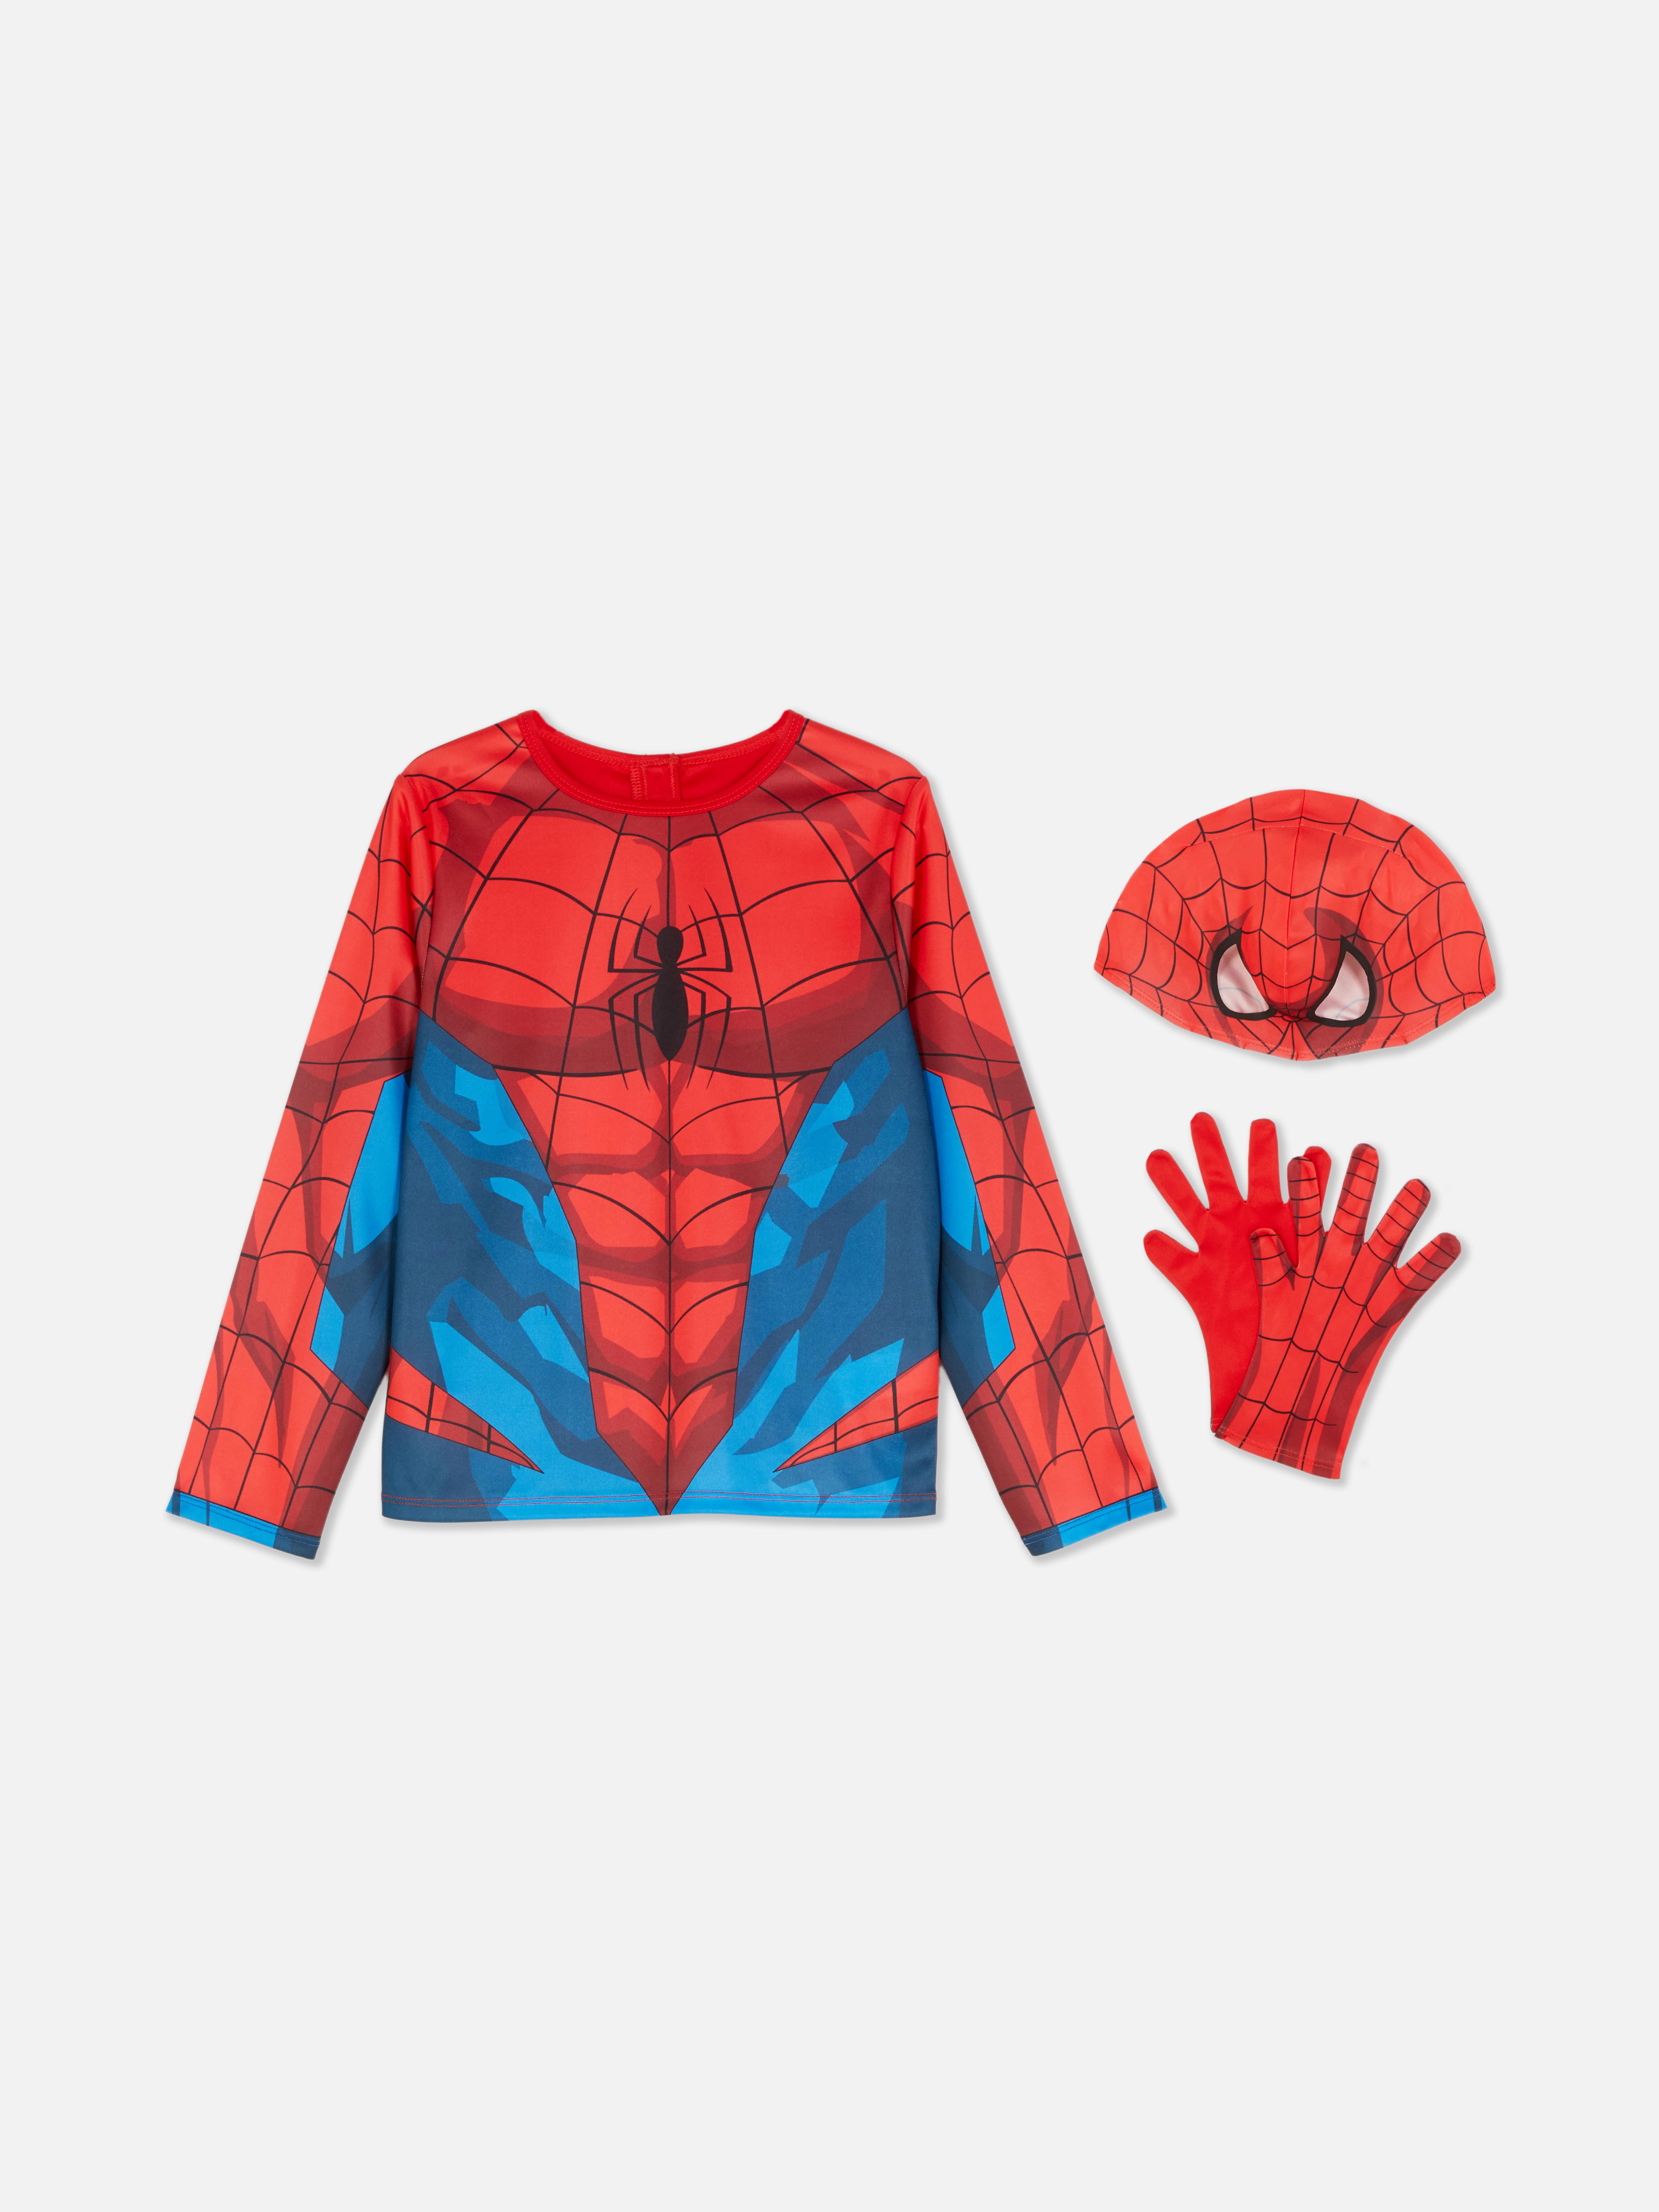 Pijama Niños Spiderman Entero Disfraz C/ Capucha Marvel®